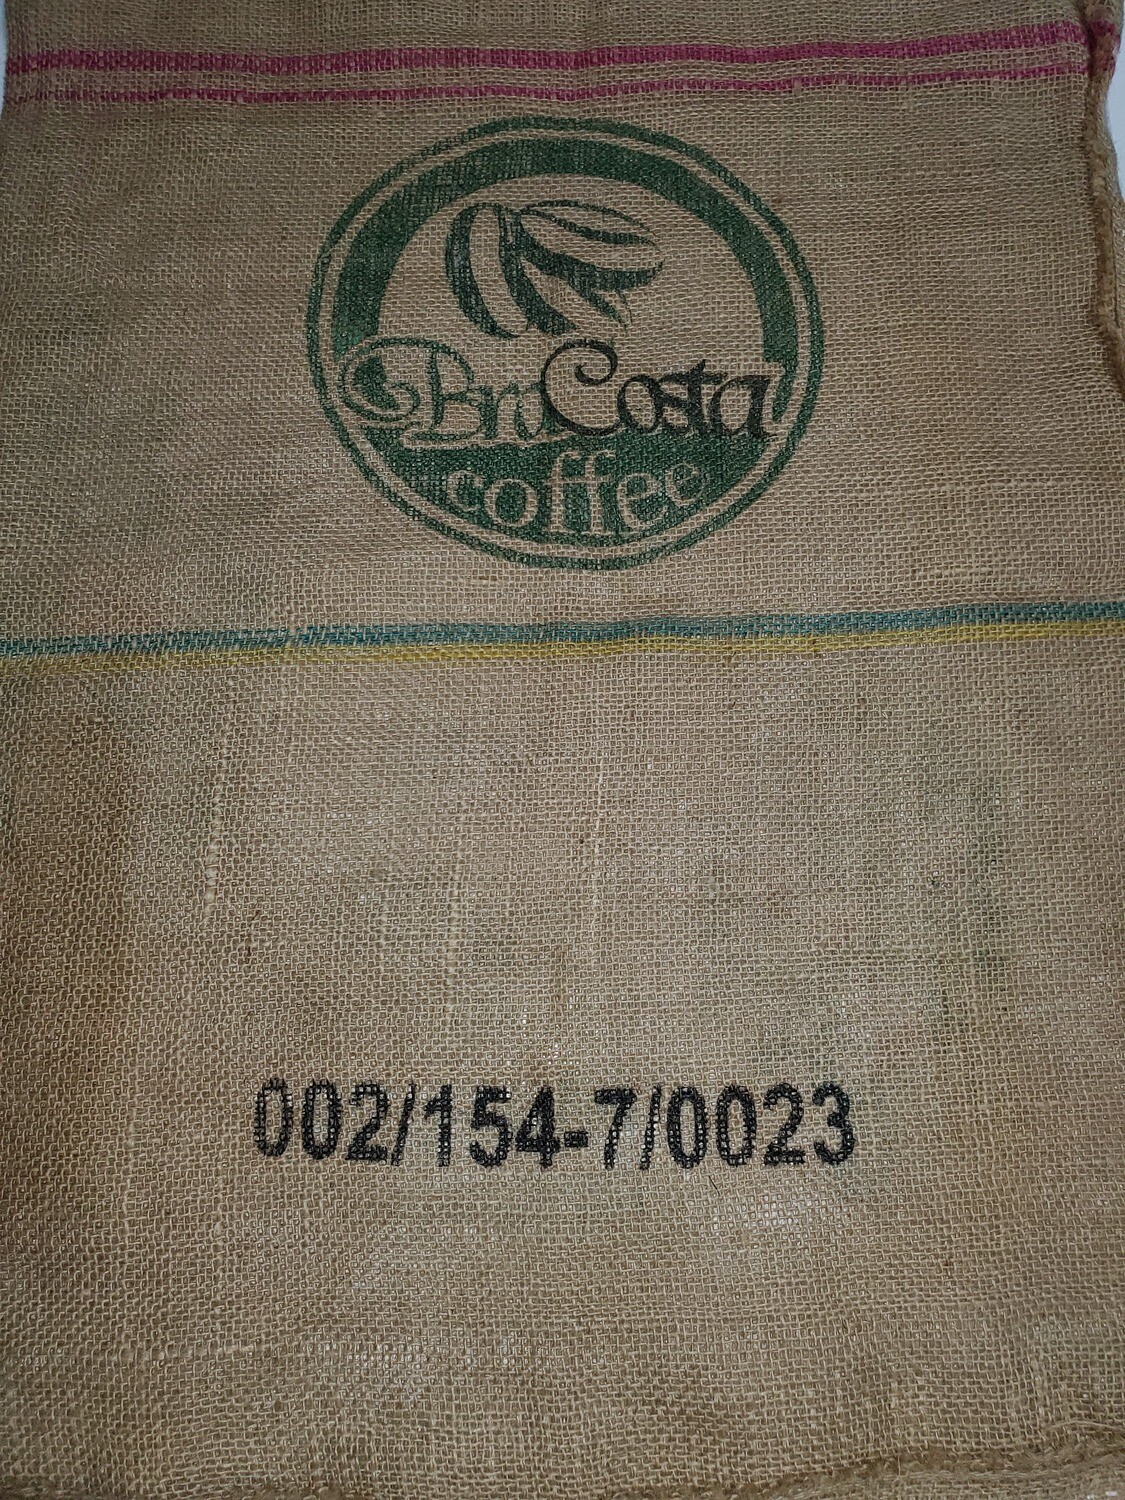 Coffee Sack, Synthetic